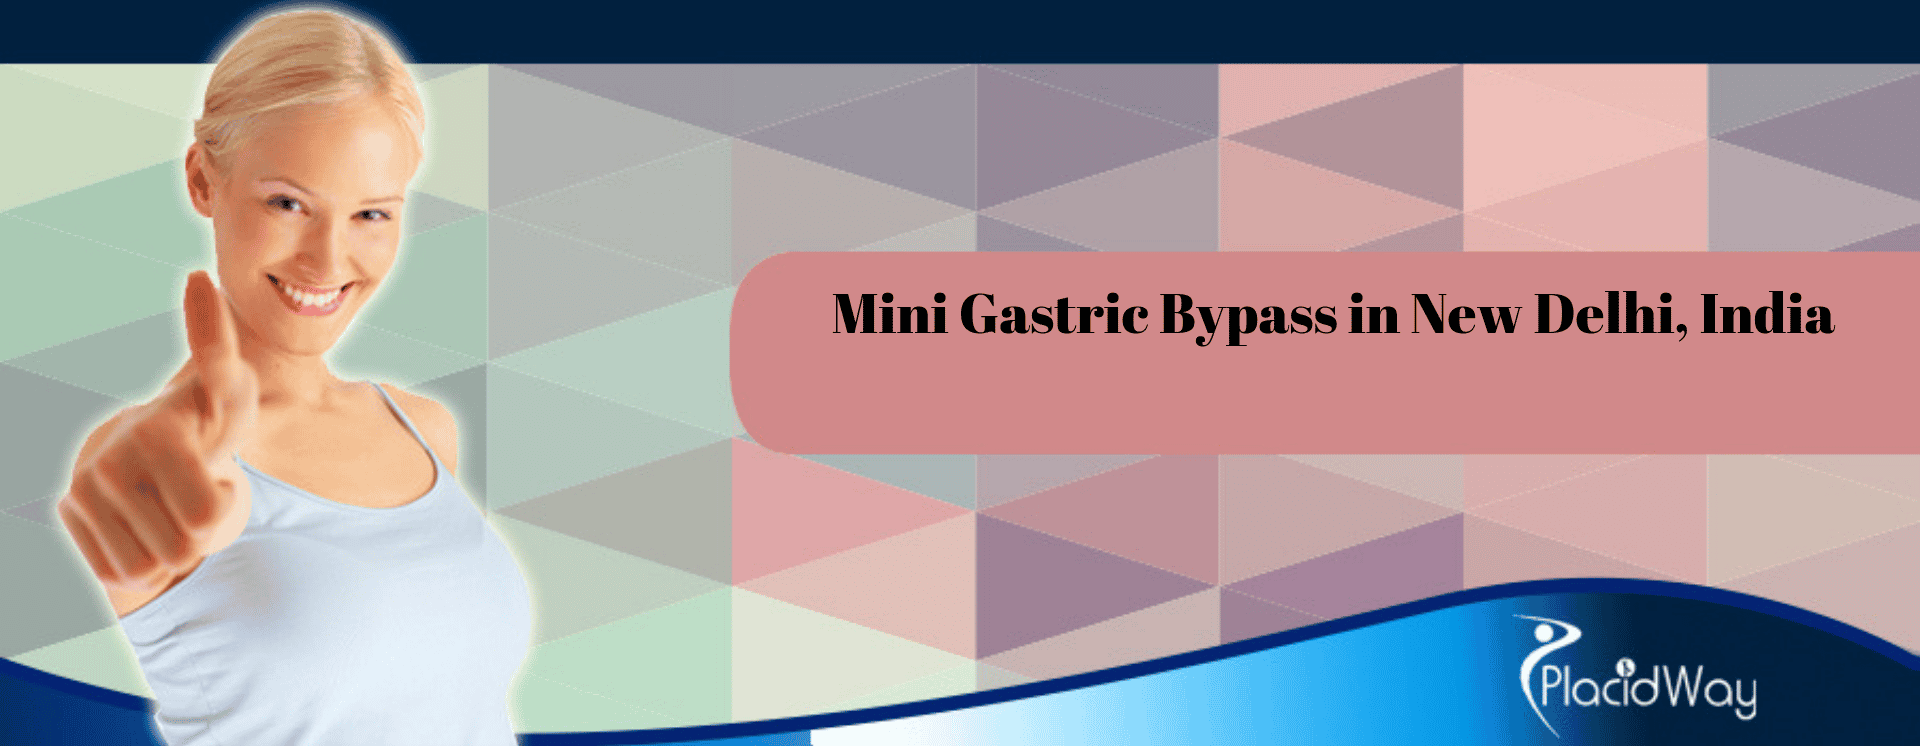 Mini Gastric Bypass in New Delhi, India